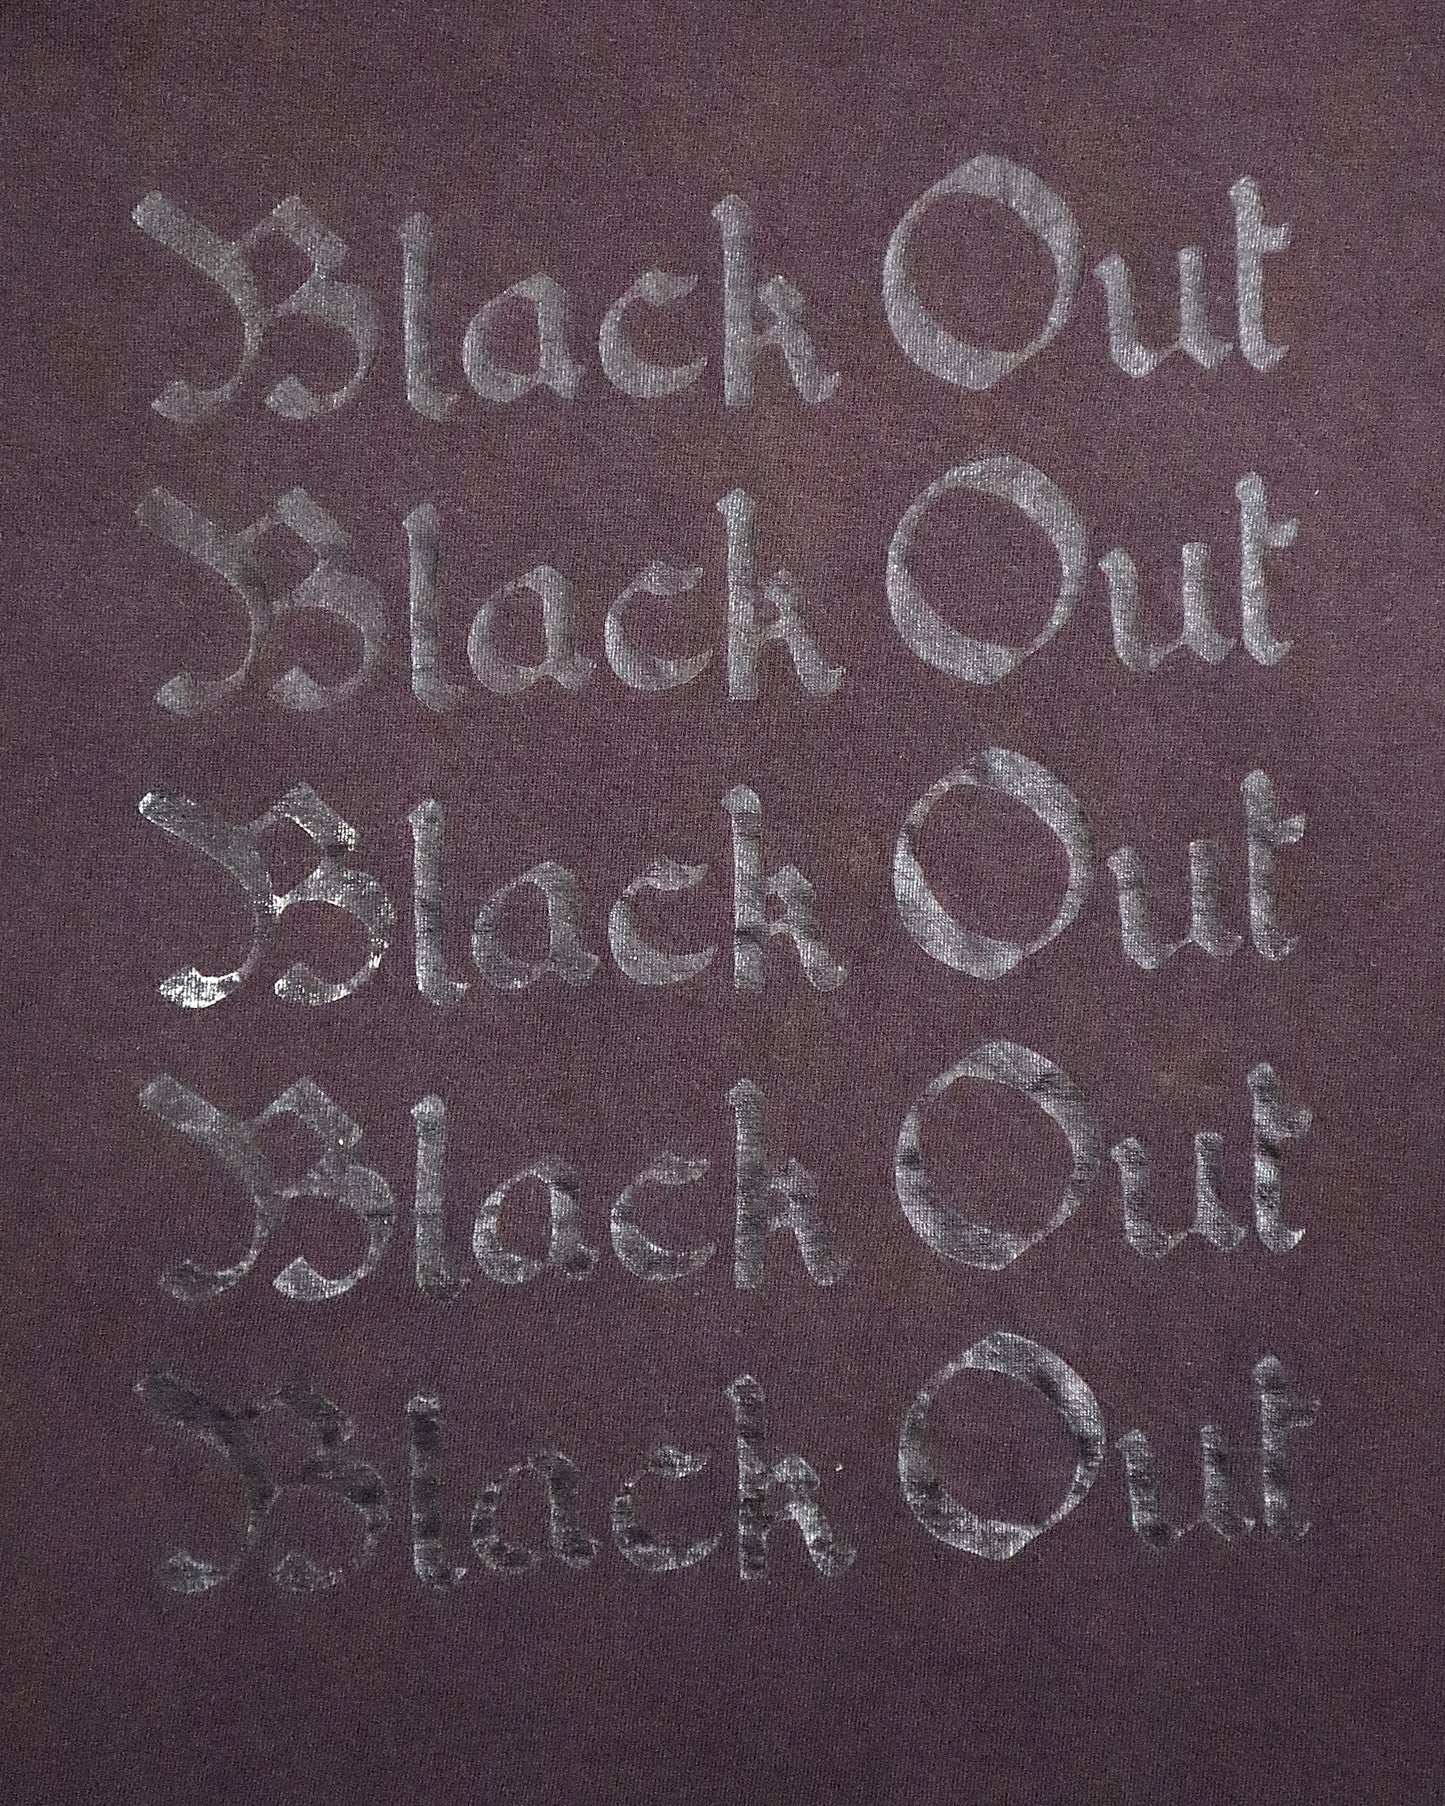 LGB 'Black Out' Tee